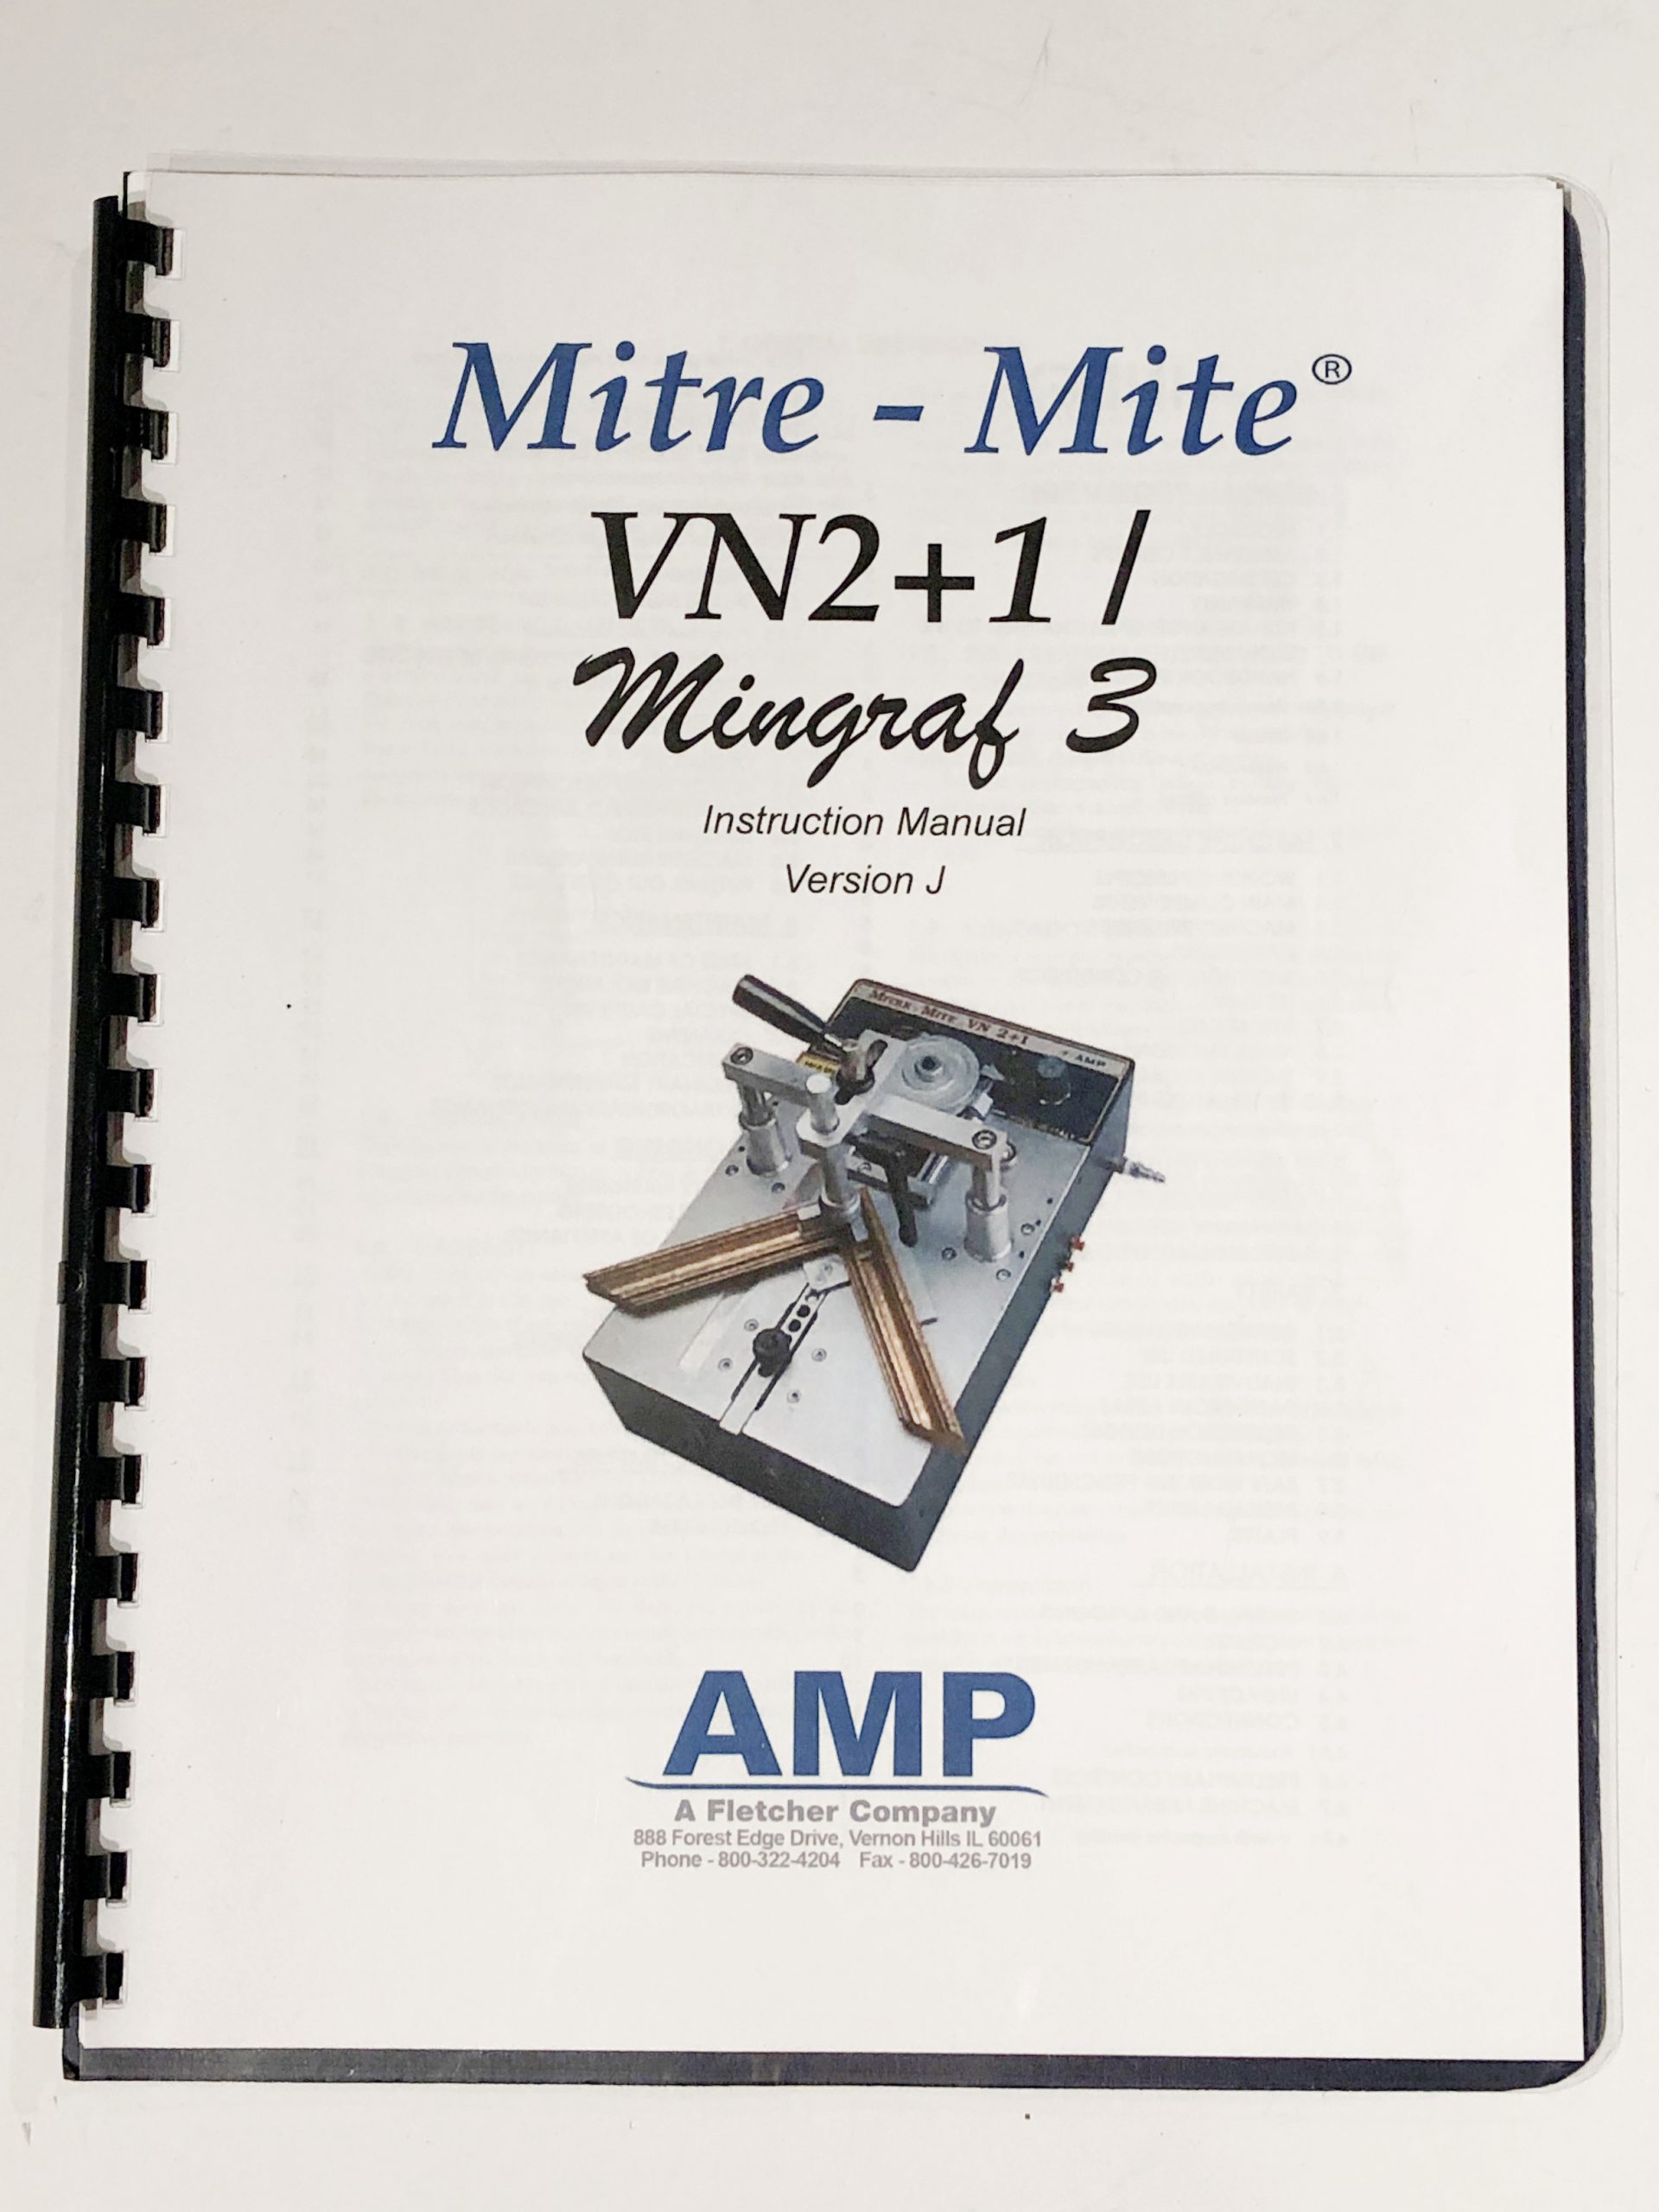 Picture Framing Equipment Lot: Mitre Mite VN2+1 / AMP U300 / Alfamachhine Minigraf 3 Vnailer & Fletcher 48″ 2200 Mat Cutter (Used) Item # UE-072922B (Pennsylvania)